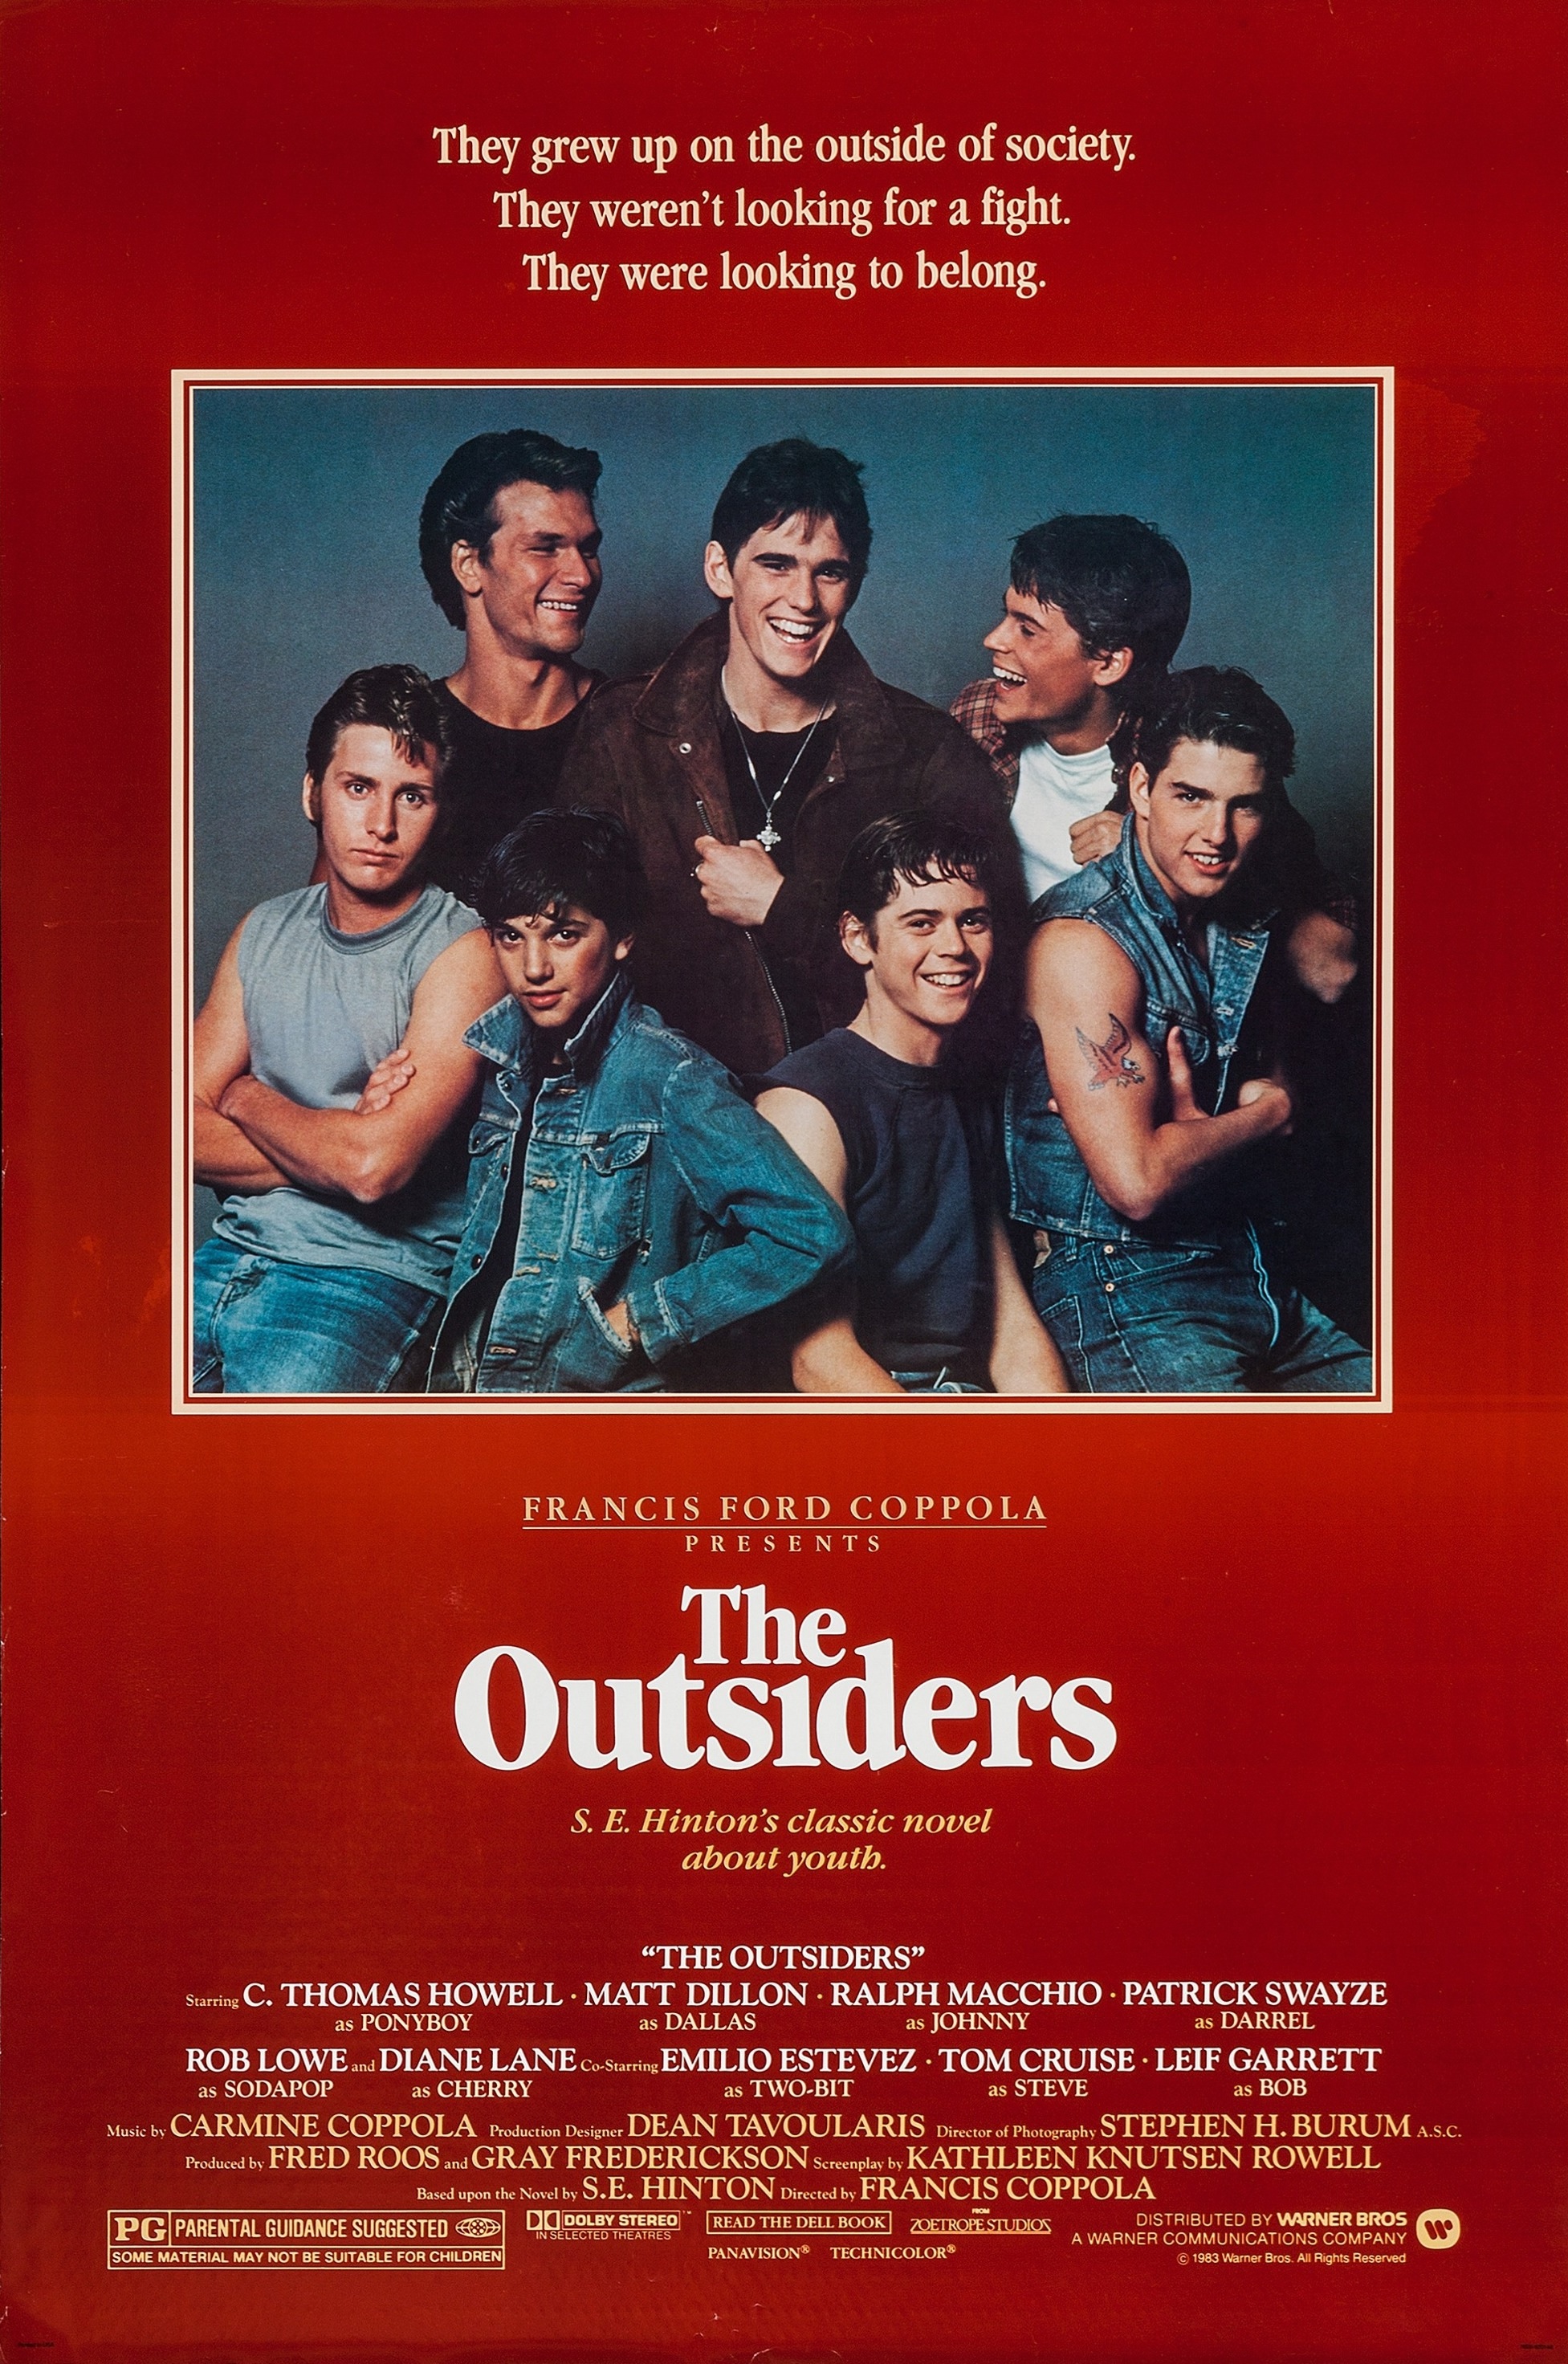 The Outsiders (film) Warner Bros